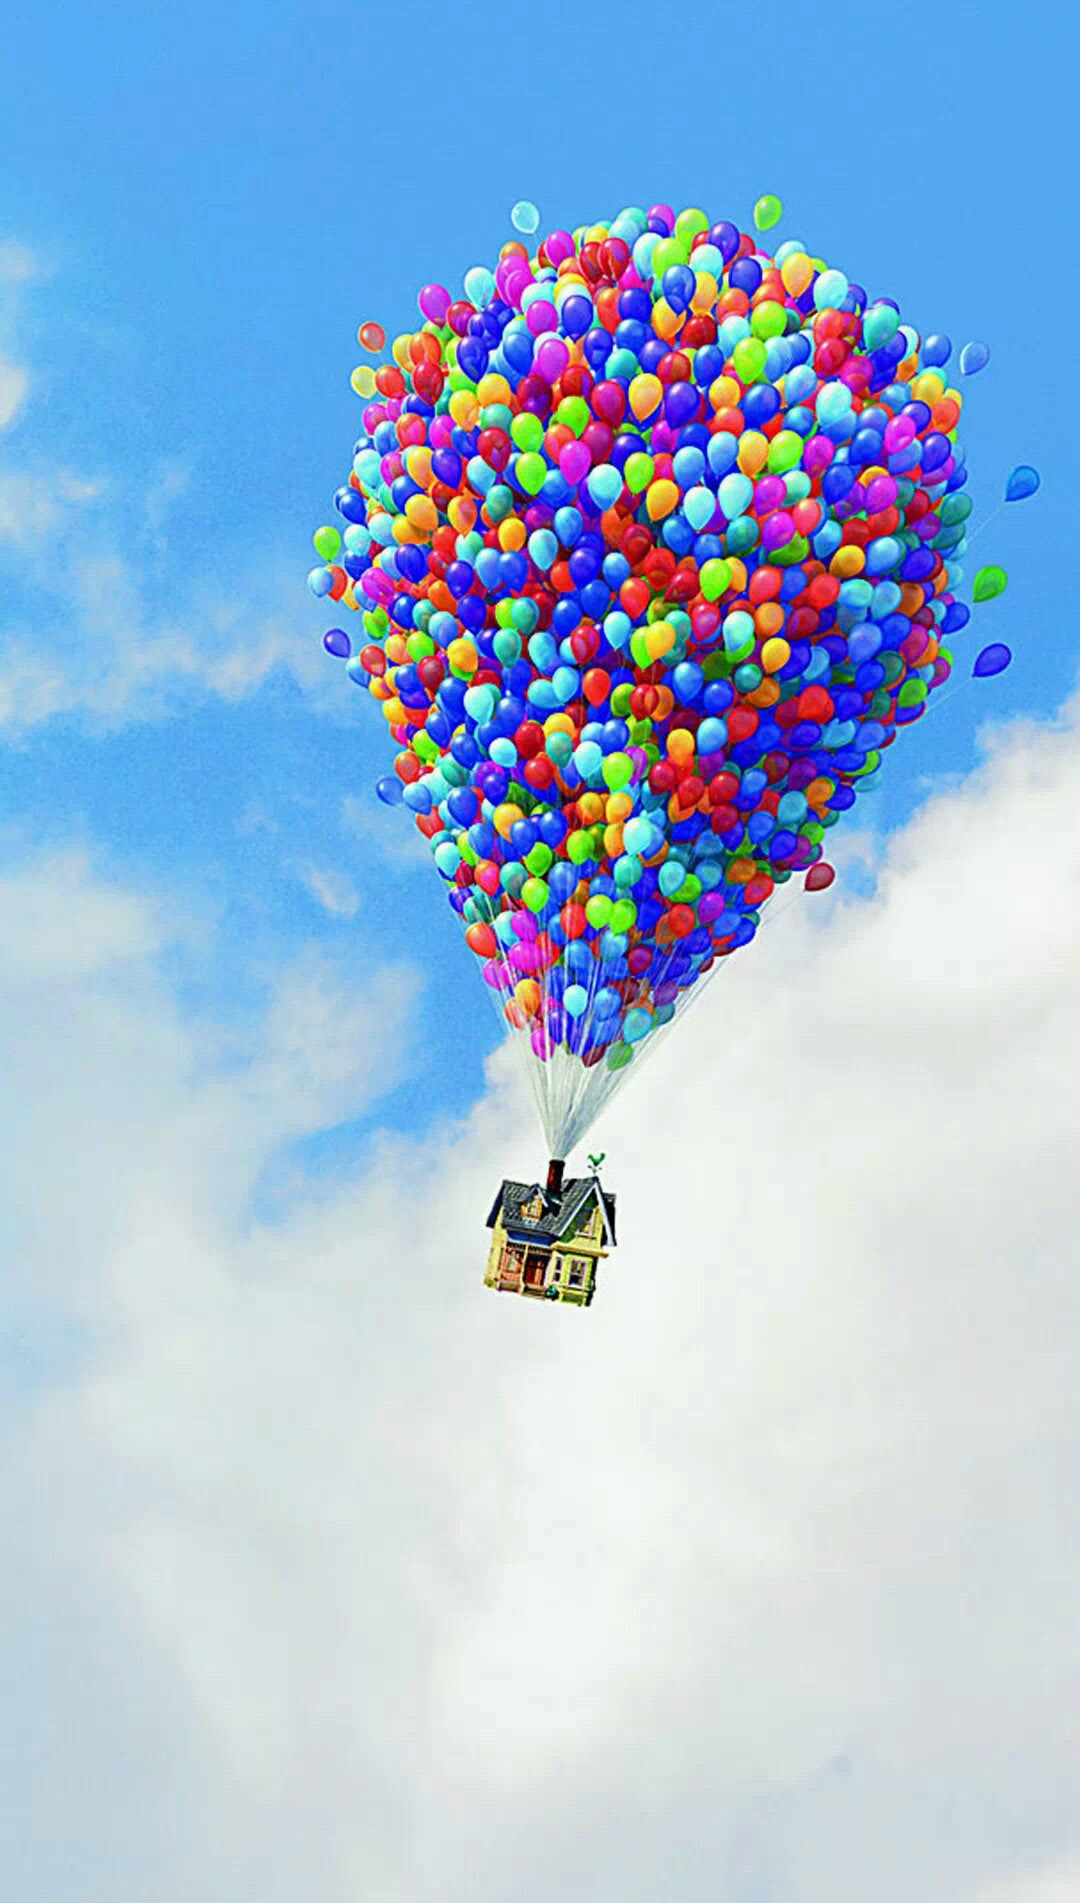 samsung mobile wallpaper,hot air ballooning,hot air balloon,balloon,sky,air sports